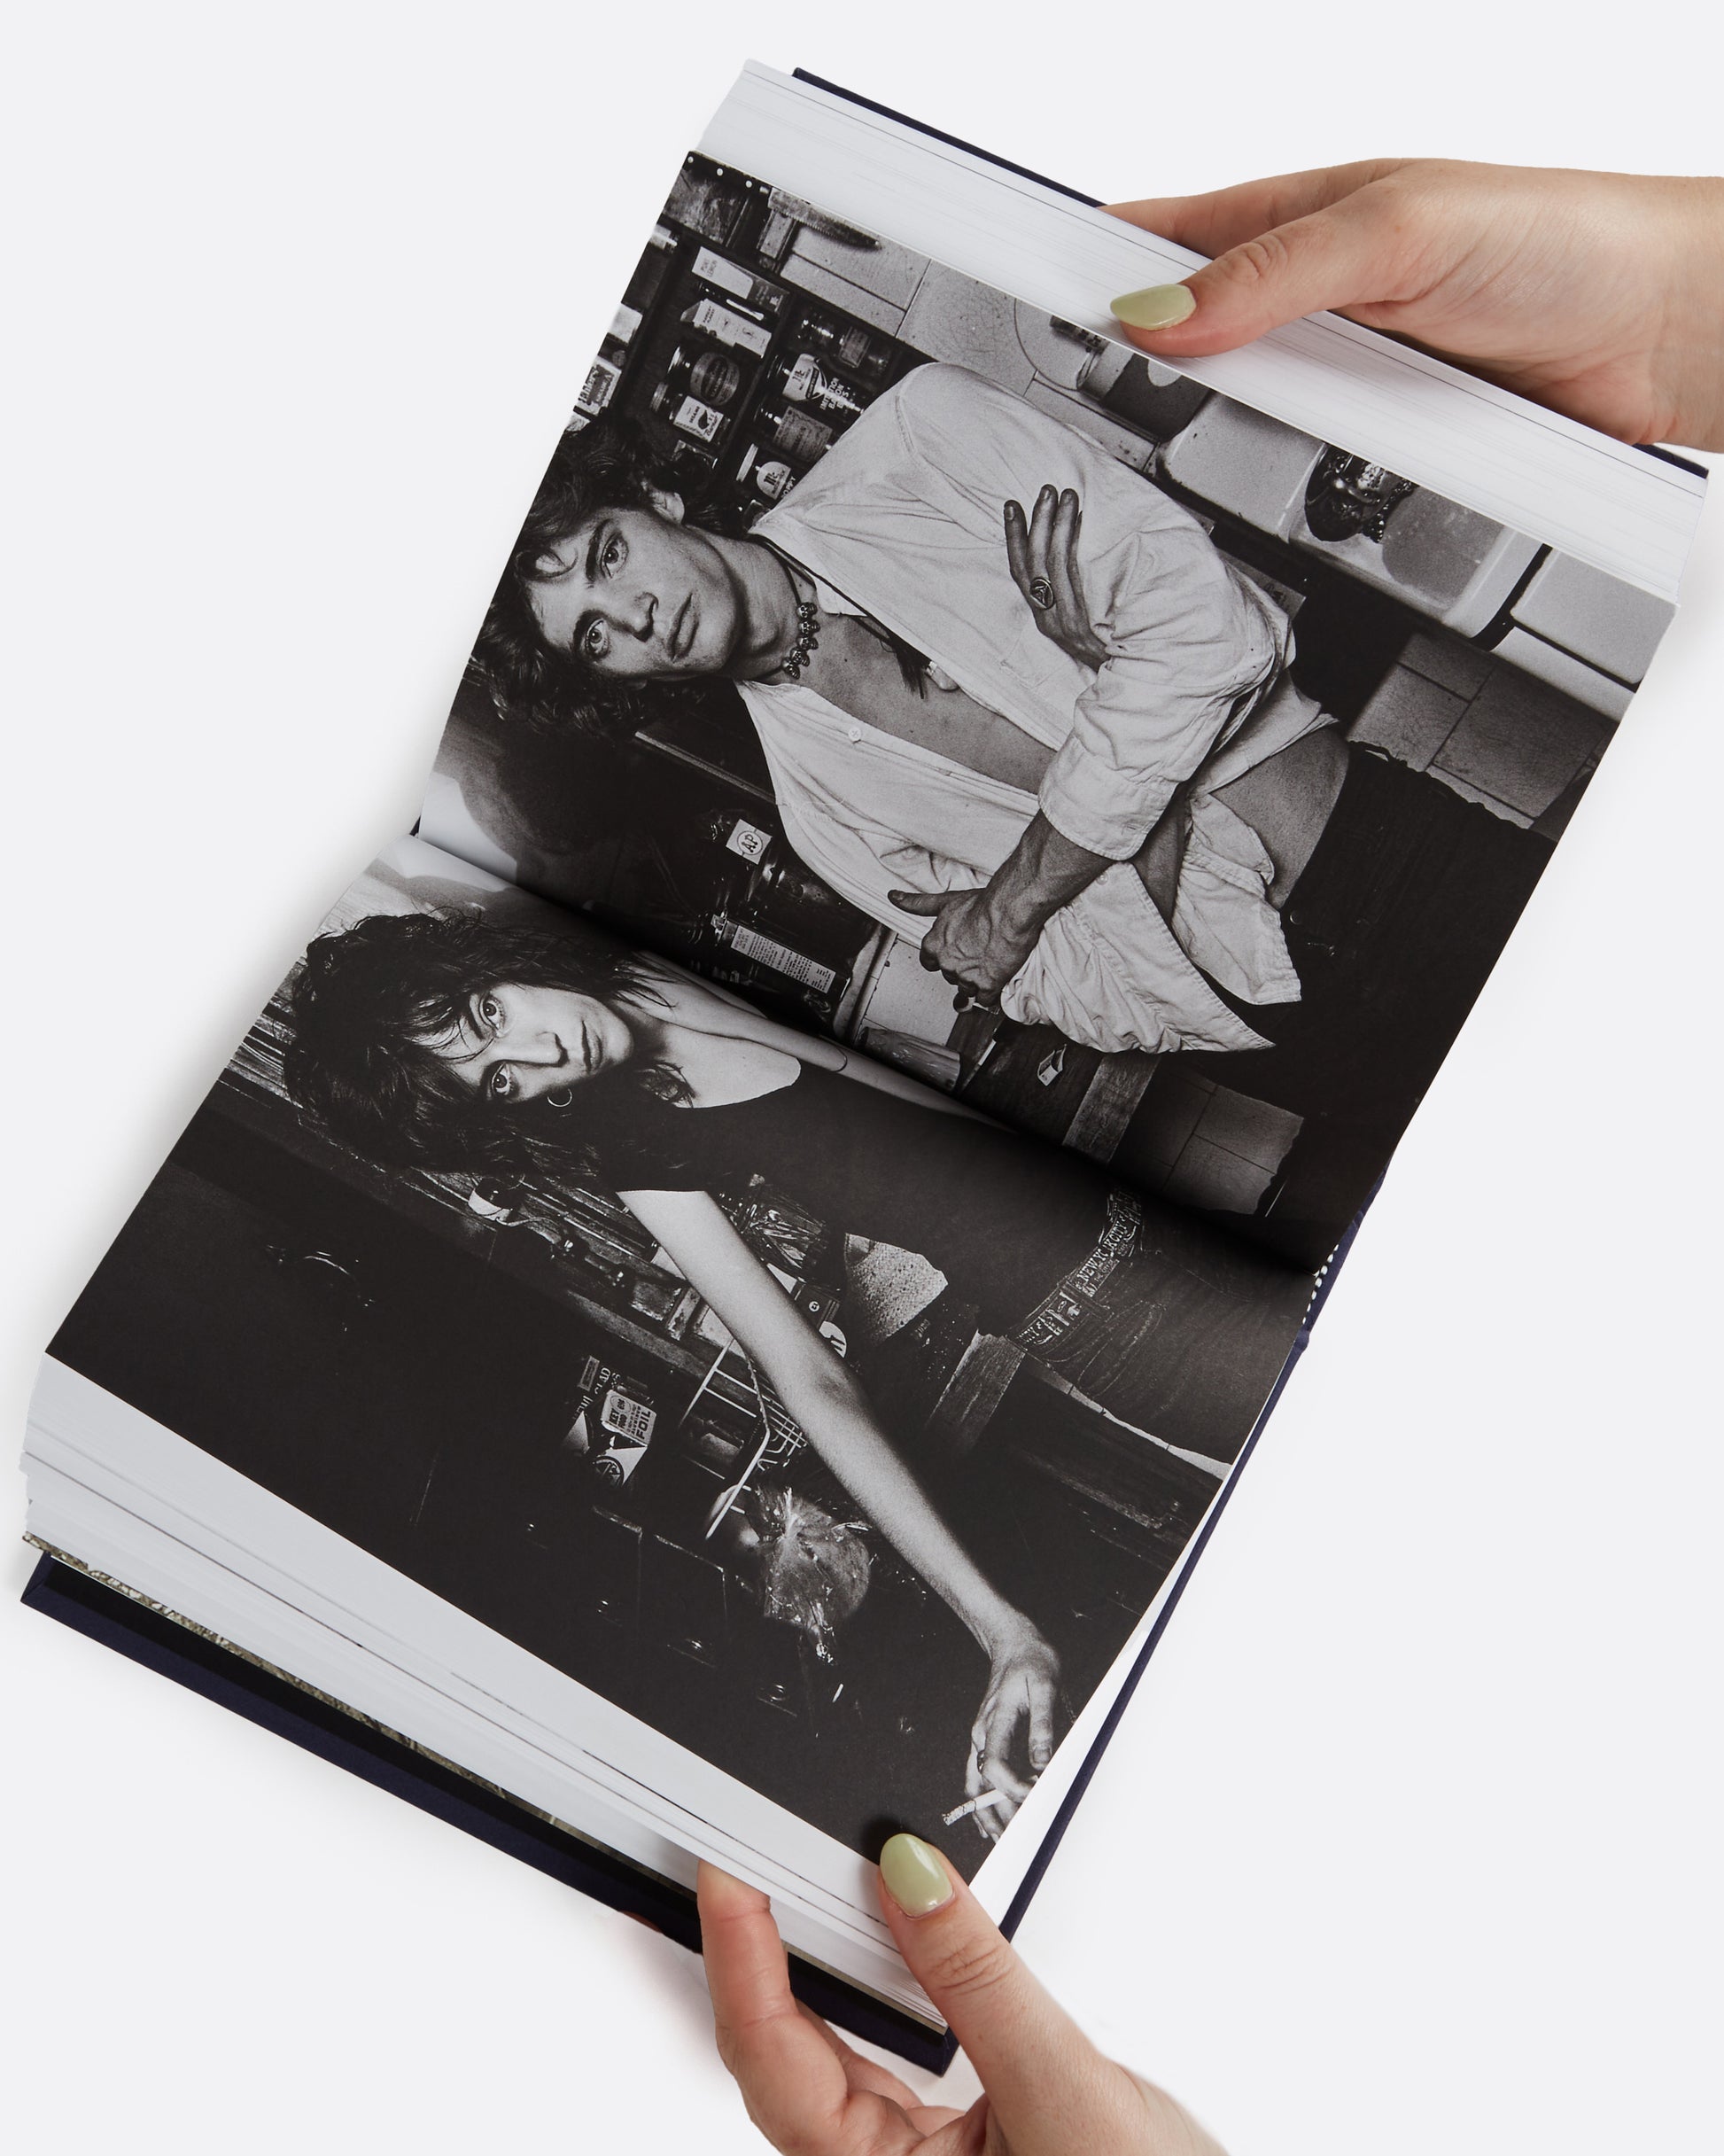 Patti Smith's award winning memoir with never-before-seen photographs, shown open.